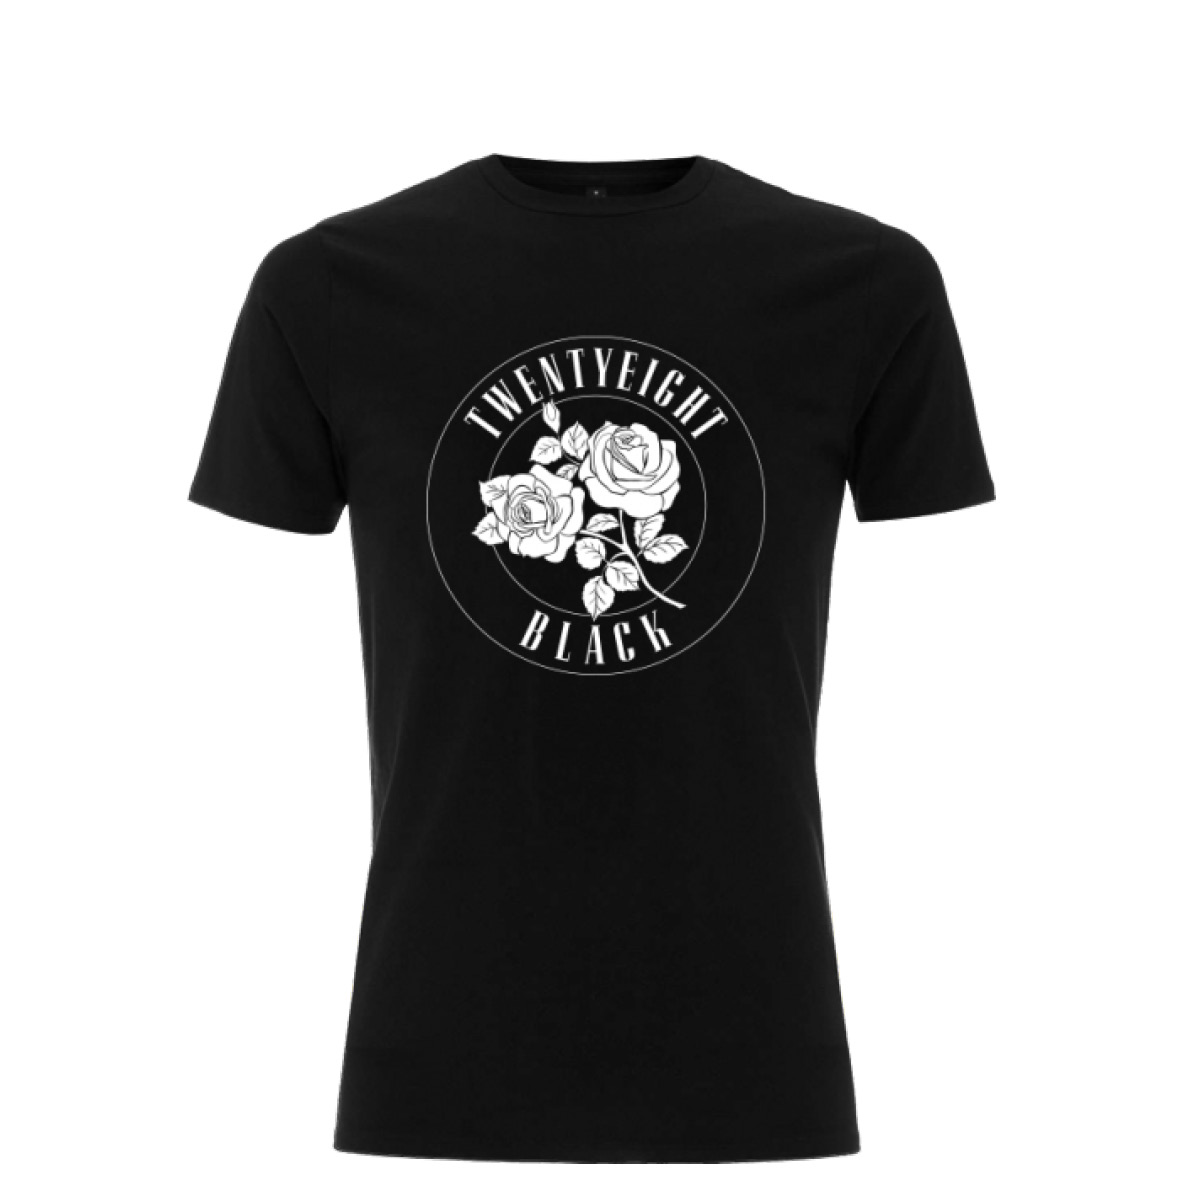 28 BLACK Band-Shirt…im Hard Rock-Style